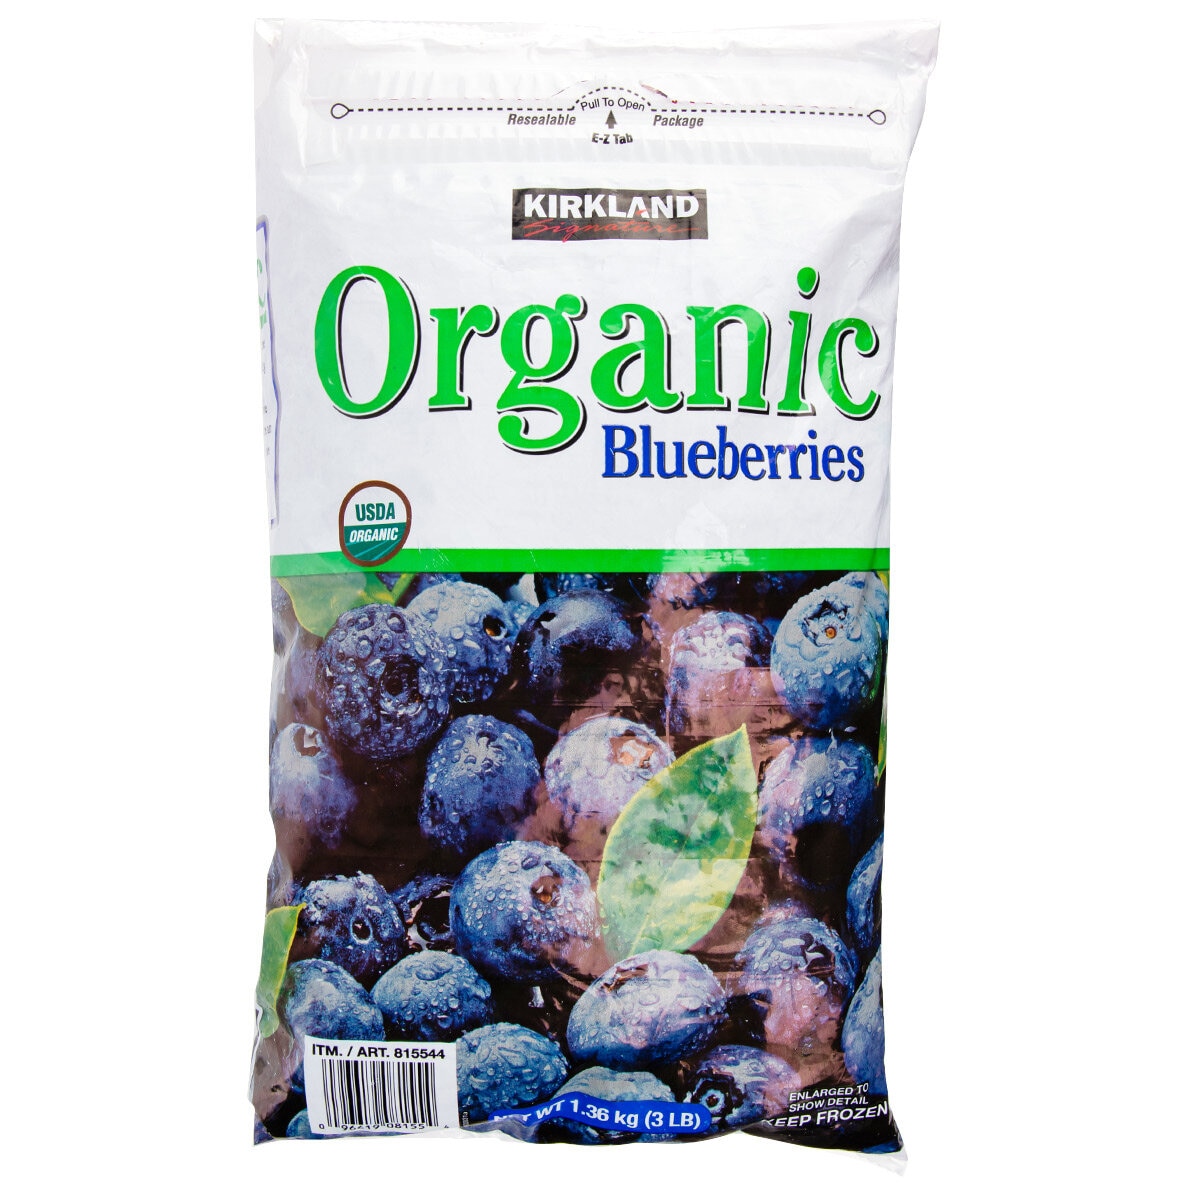 Kirkland Signature Organic Blueberries 1.36kg